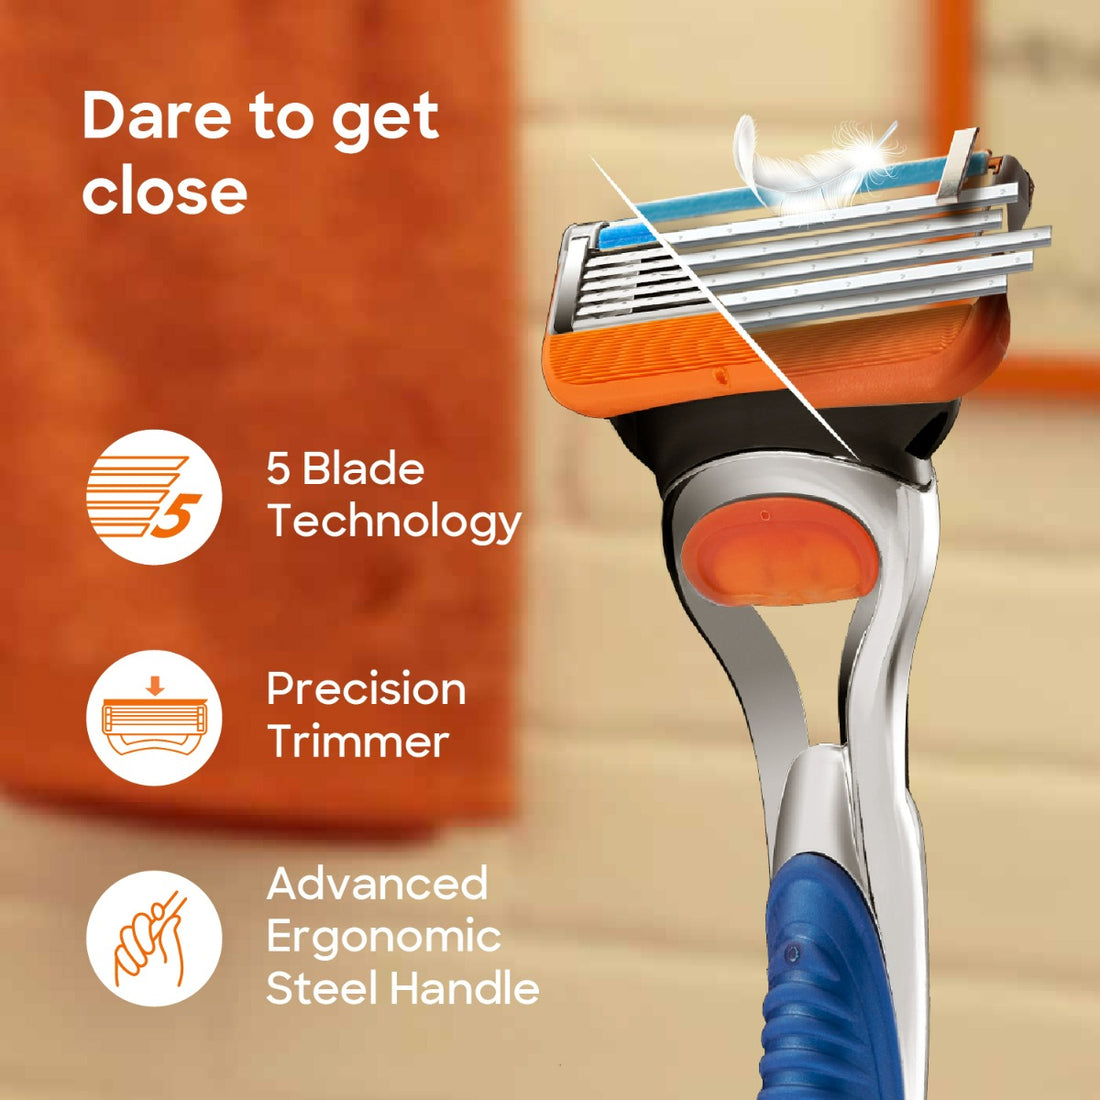 Gillette Fusion Manual Shaving Razor Blades - 4s Pack (Cartridge)